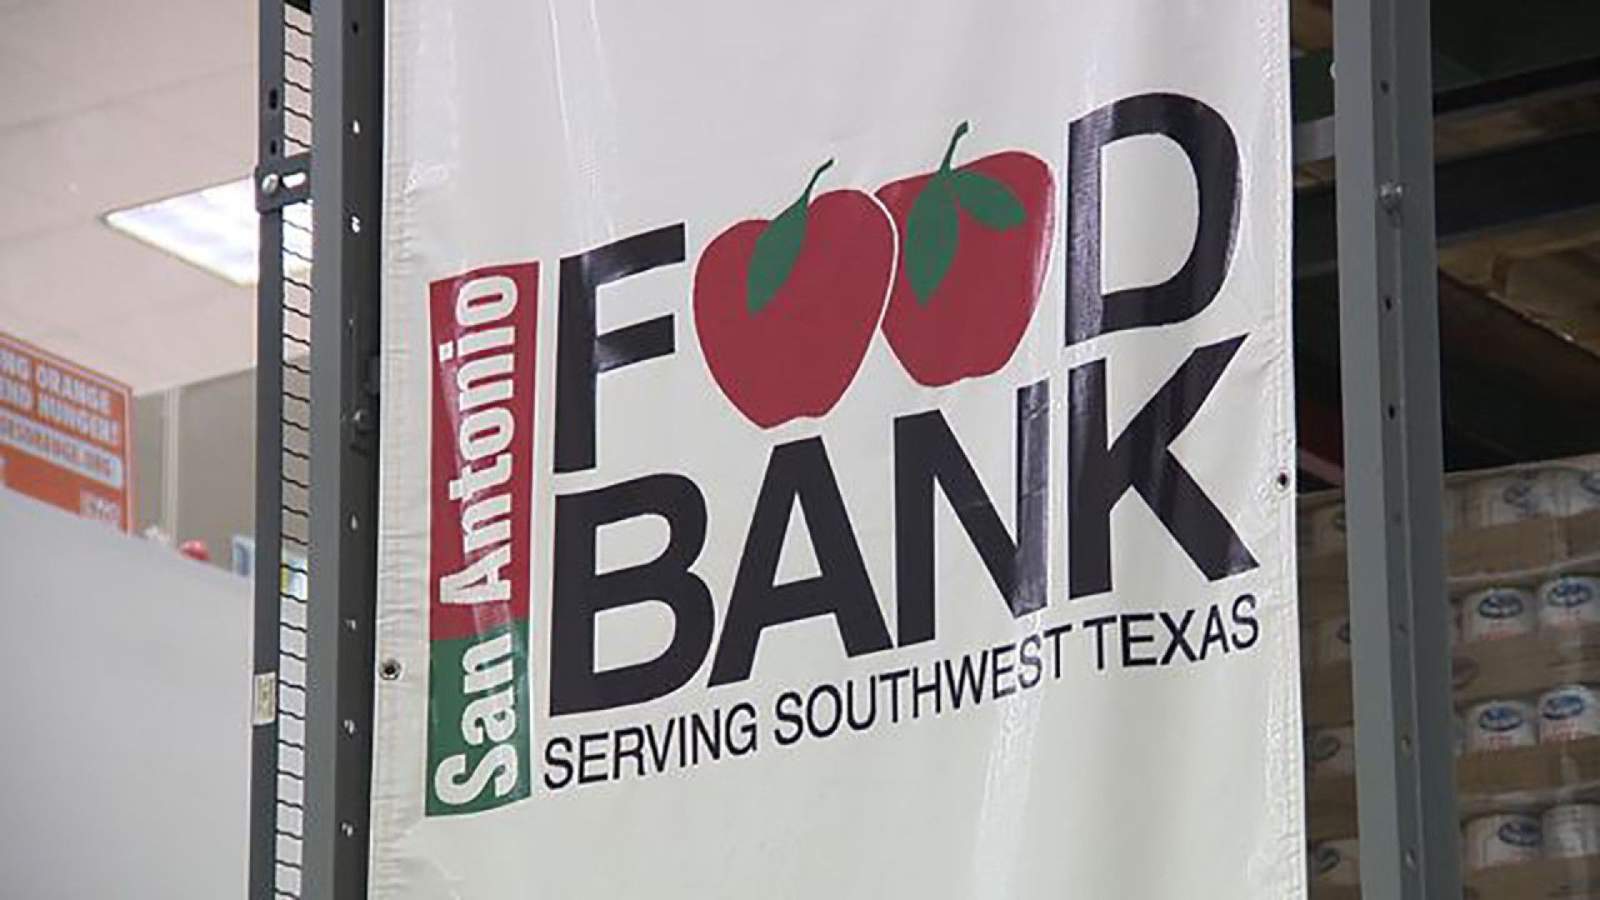 San Antonio Food Bank needs over 500 volunteers to help at 7 mega mobile food distribution sites this weekend